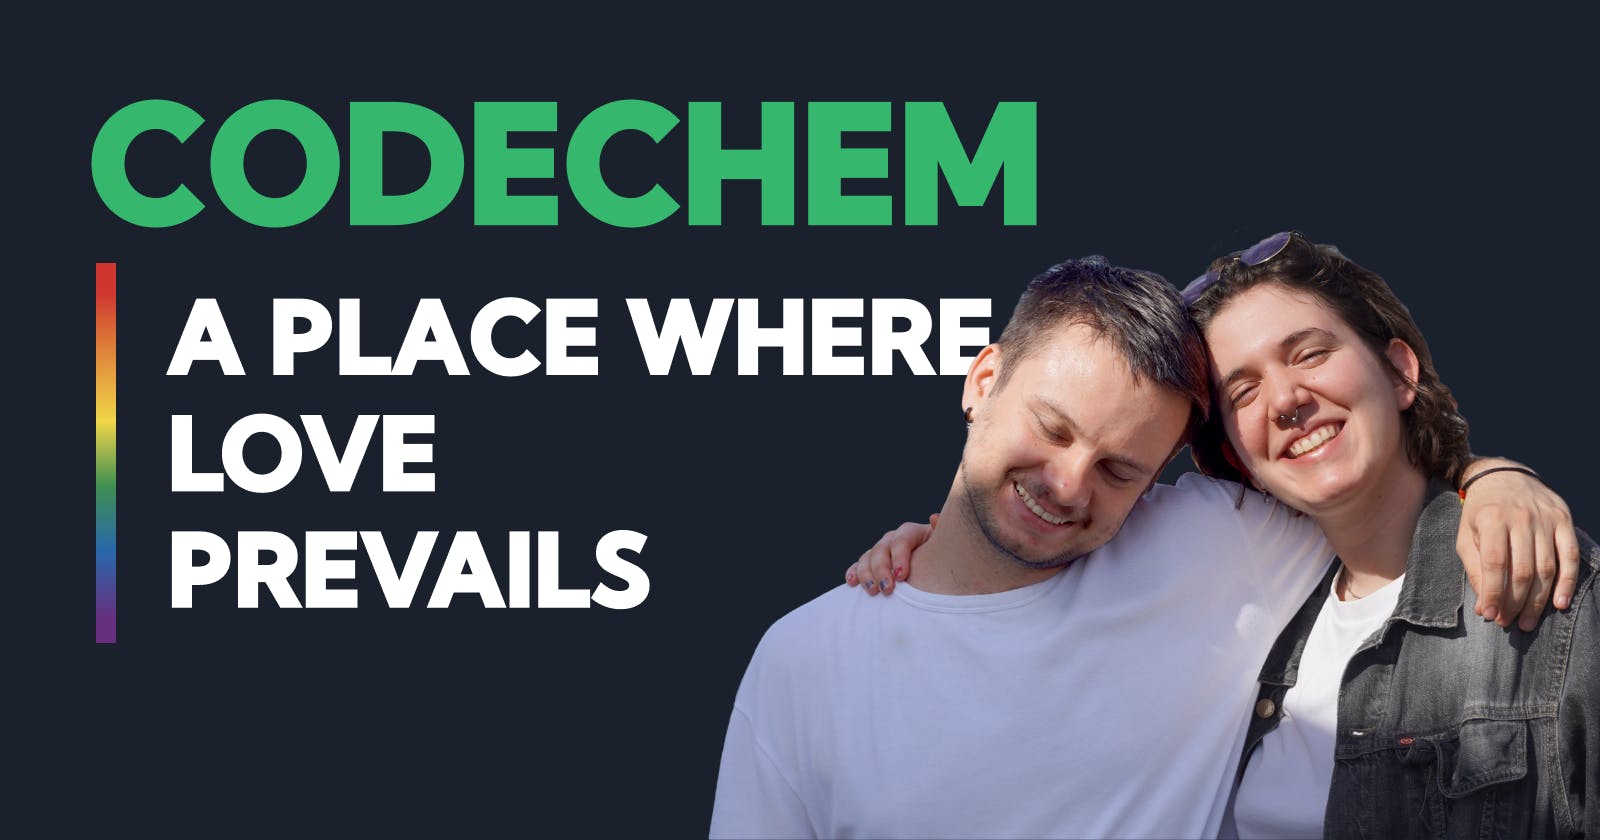 CodeChem: A Place Where Love Prevails